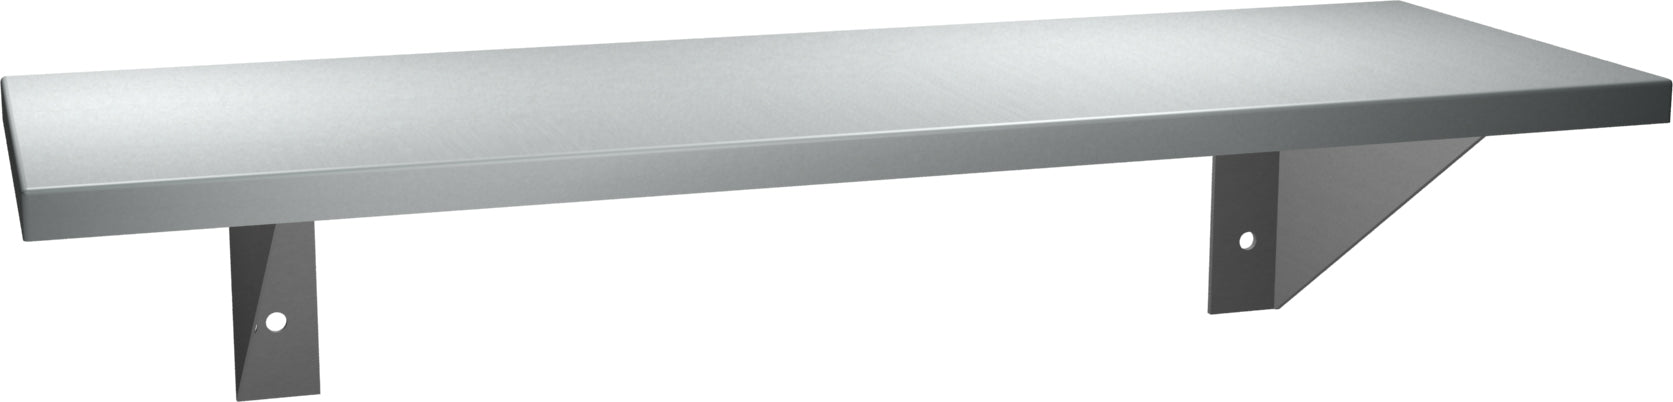 ASI 0692-860 Shelf, Stainless Steel, 8 X 60 Inch